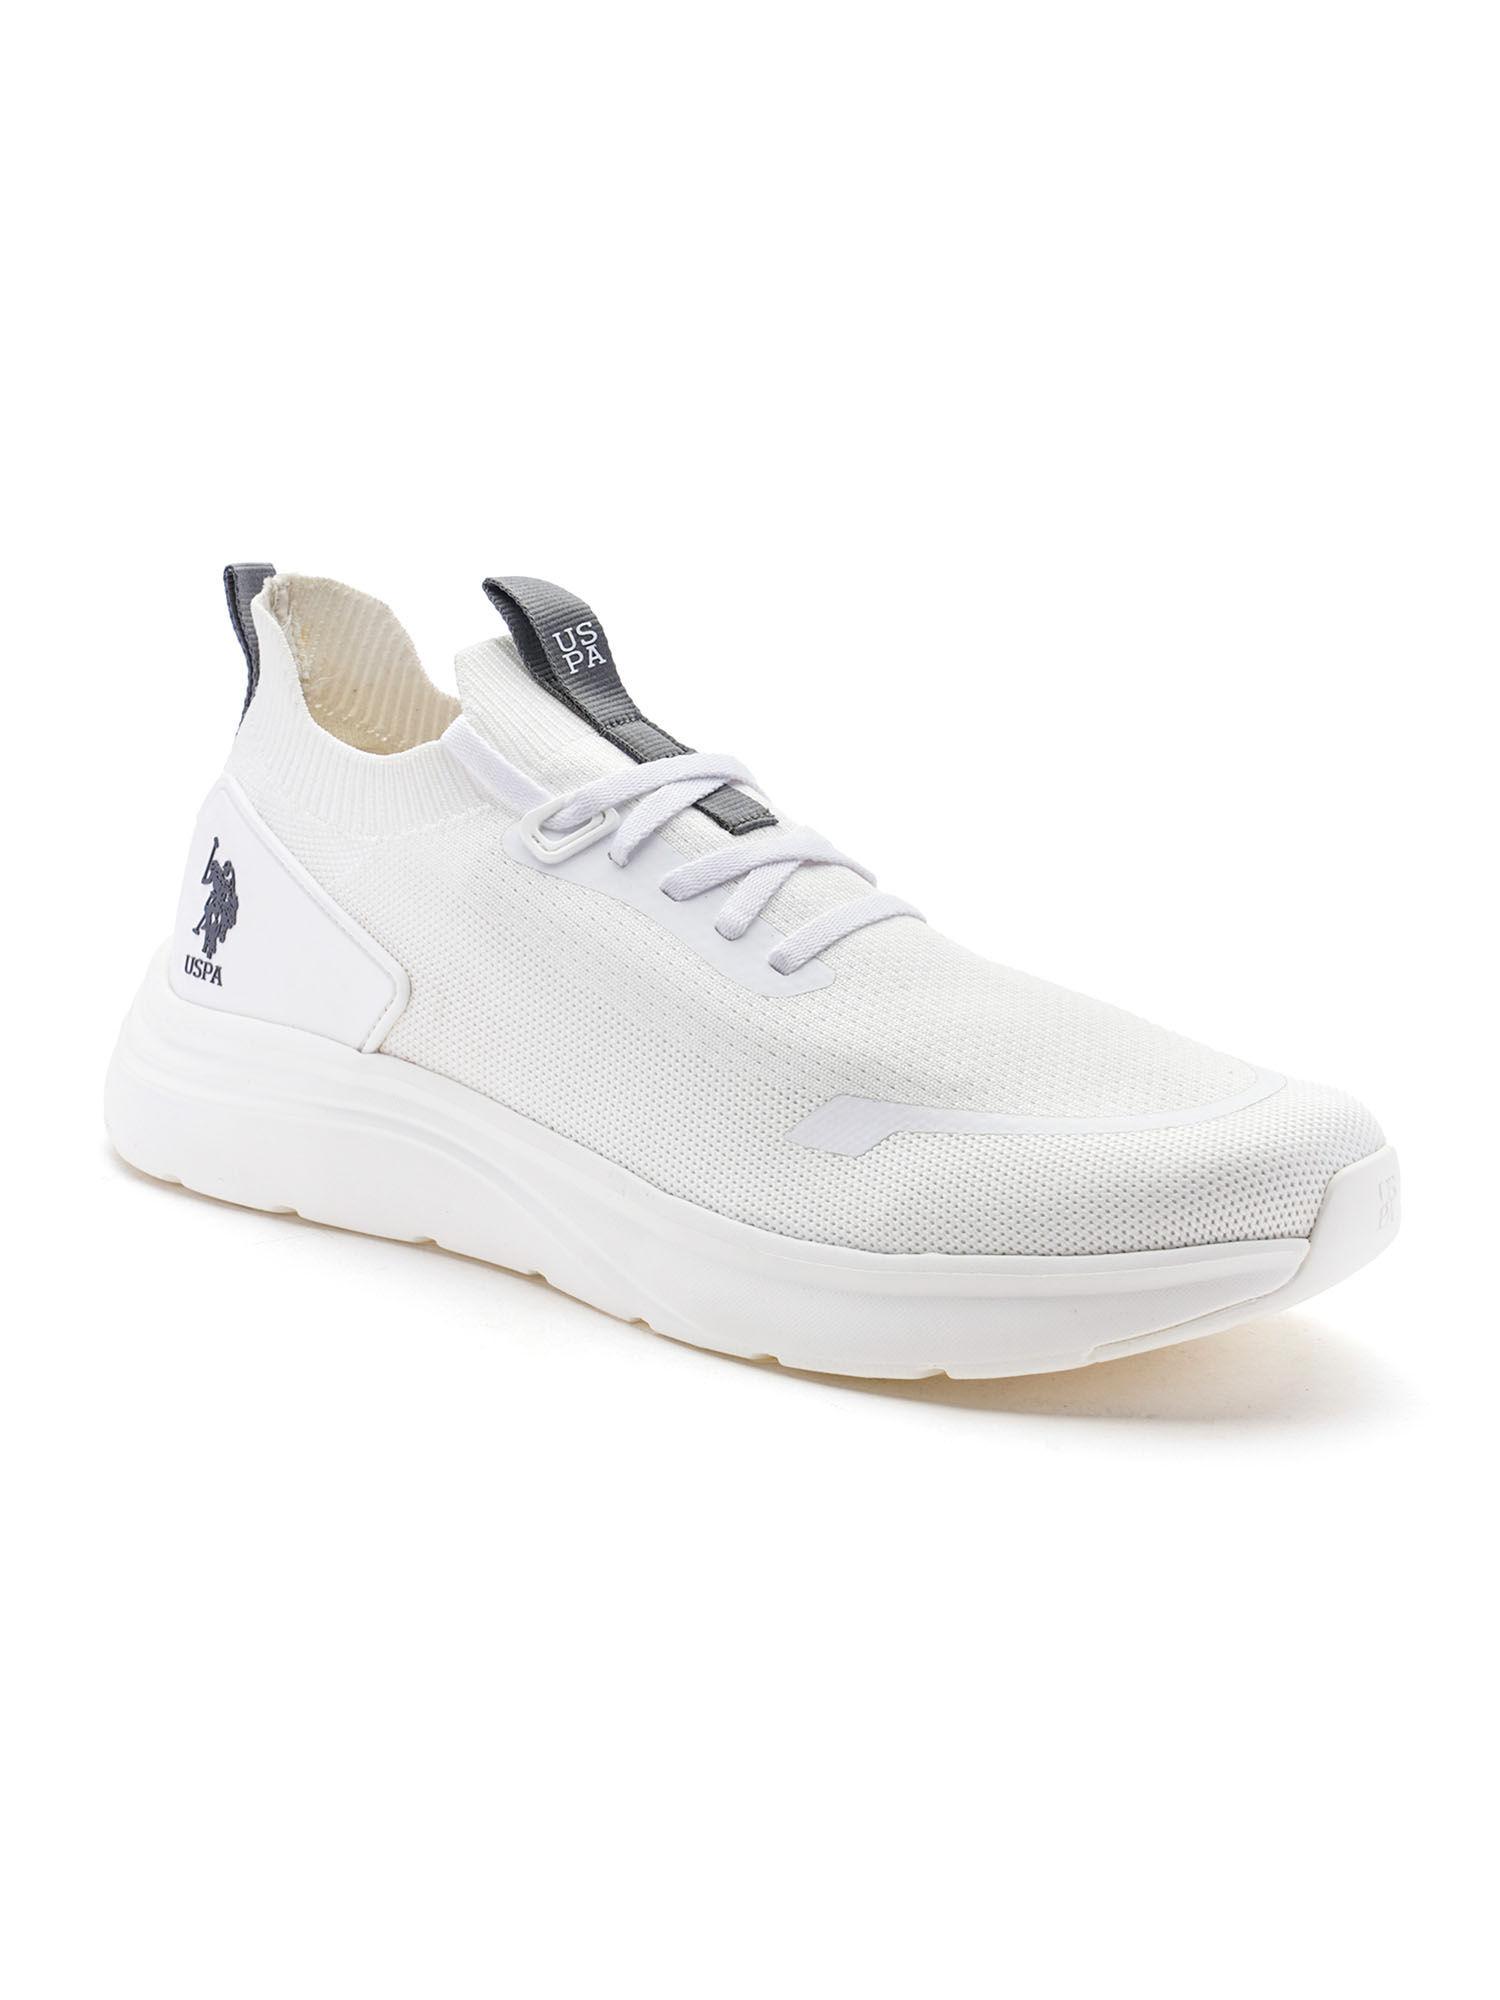 oxley-3.0-men-white-walking-shoes